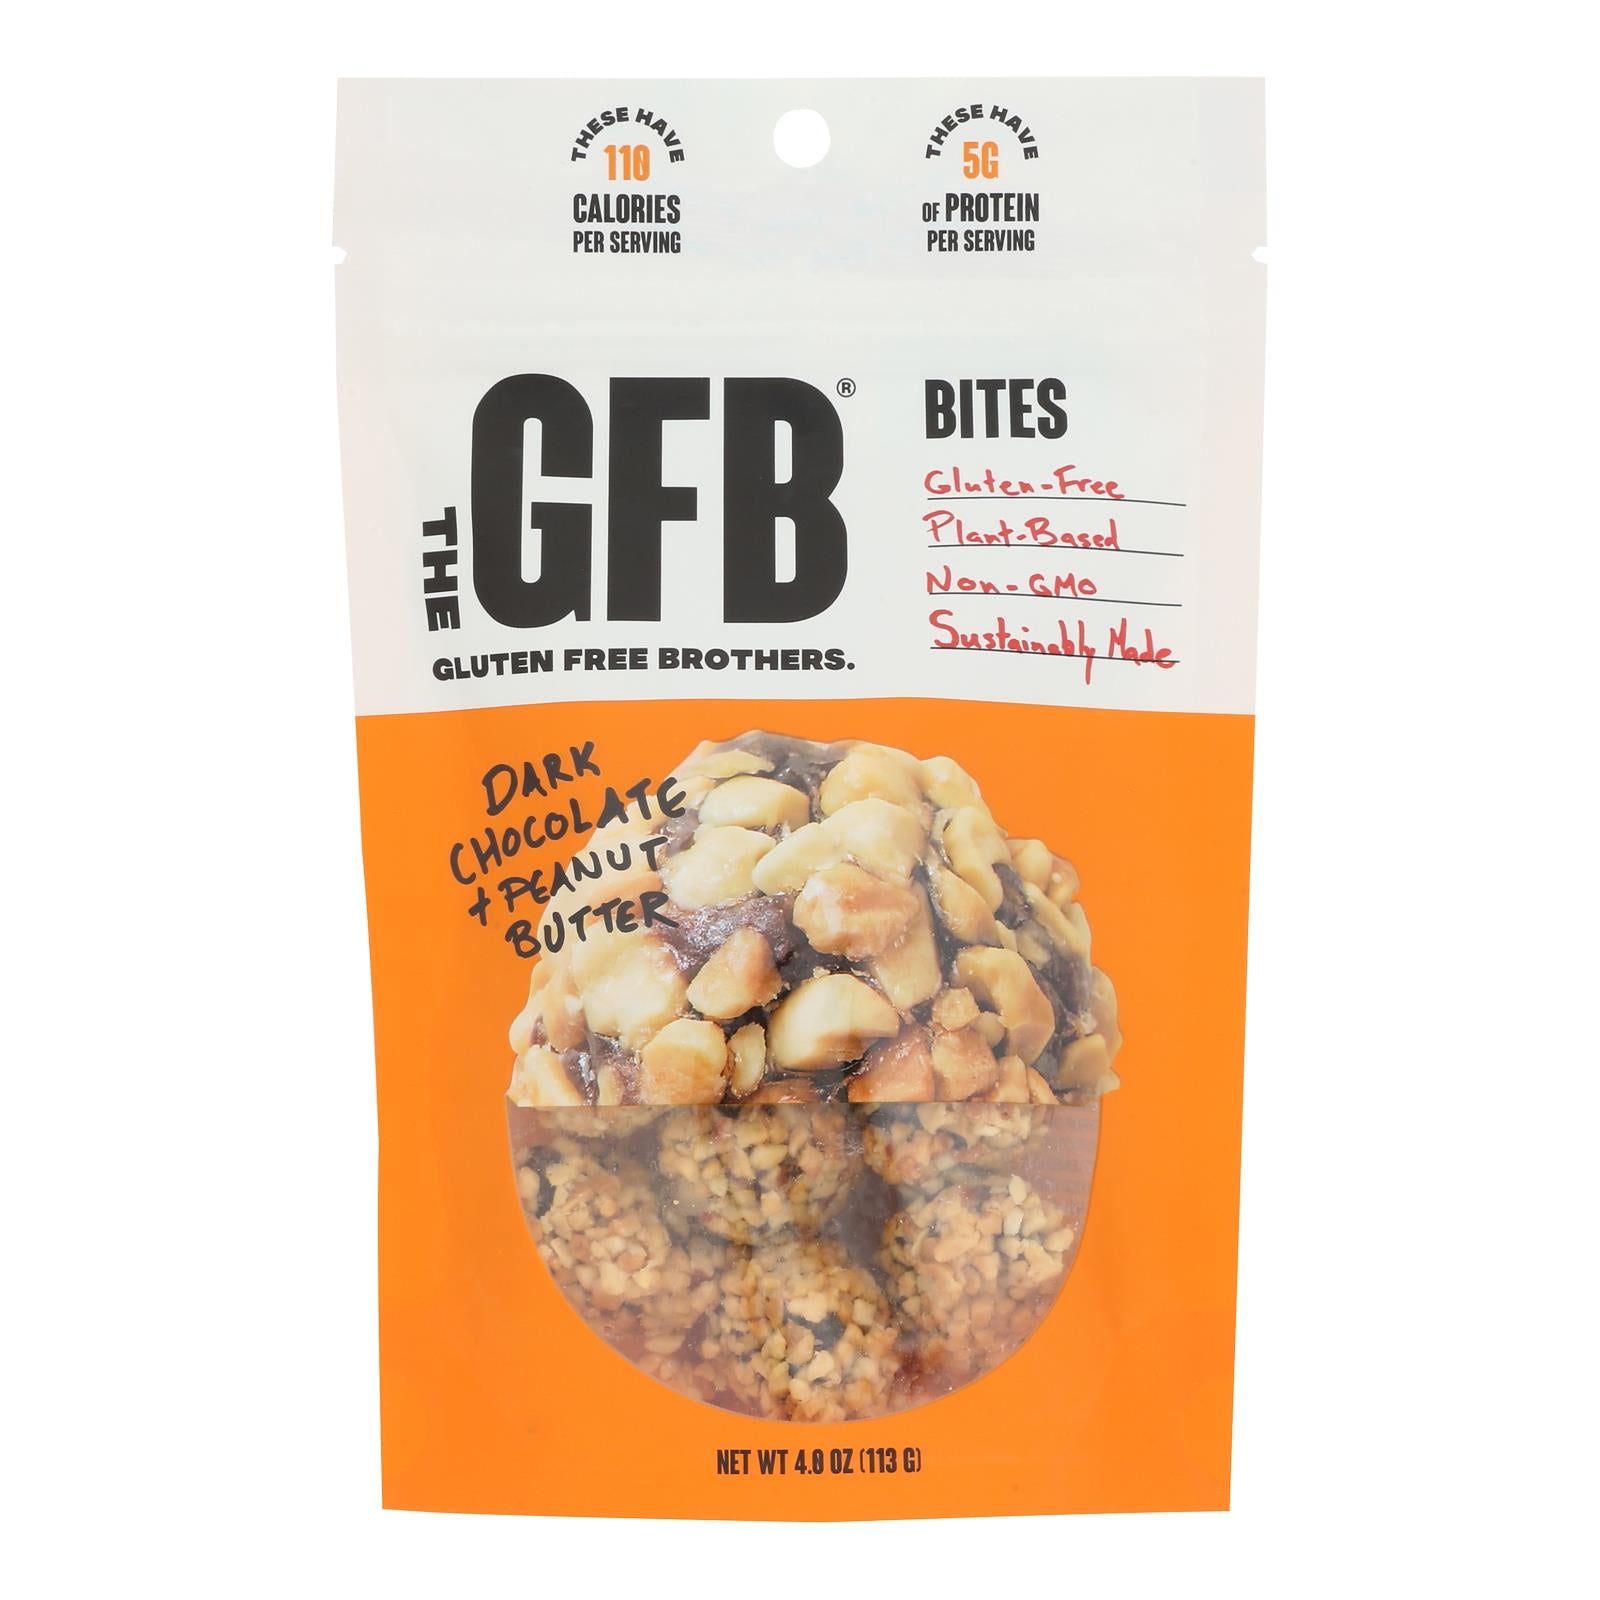 The Gfb Dark Chocolate Peanut Butter Bites  - Case Of 6 - 4 Oz